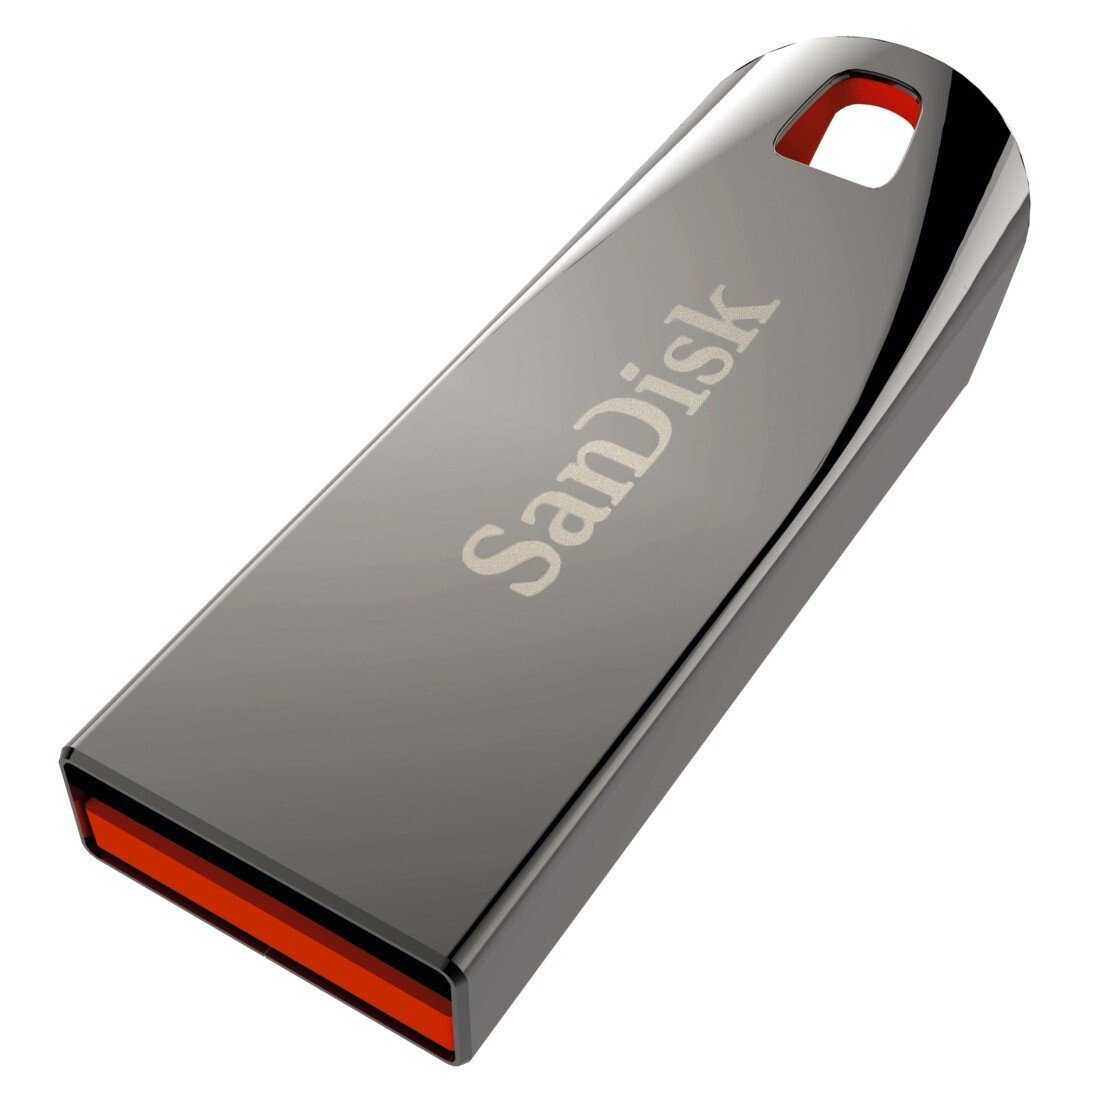 Buy SanDisk Cruzer Force USB Flash Drive online in Pakistan 